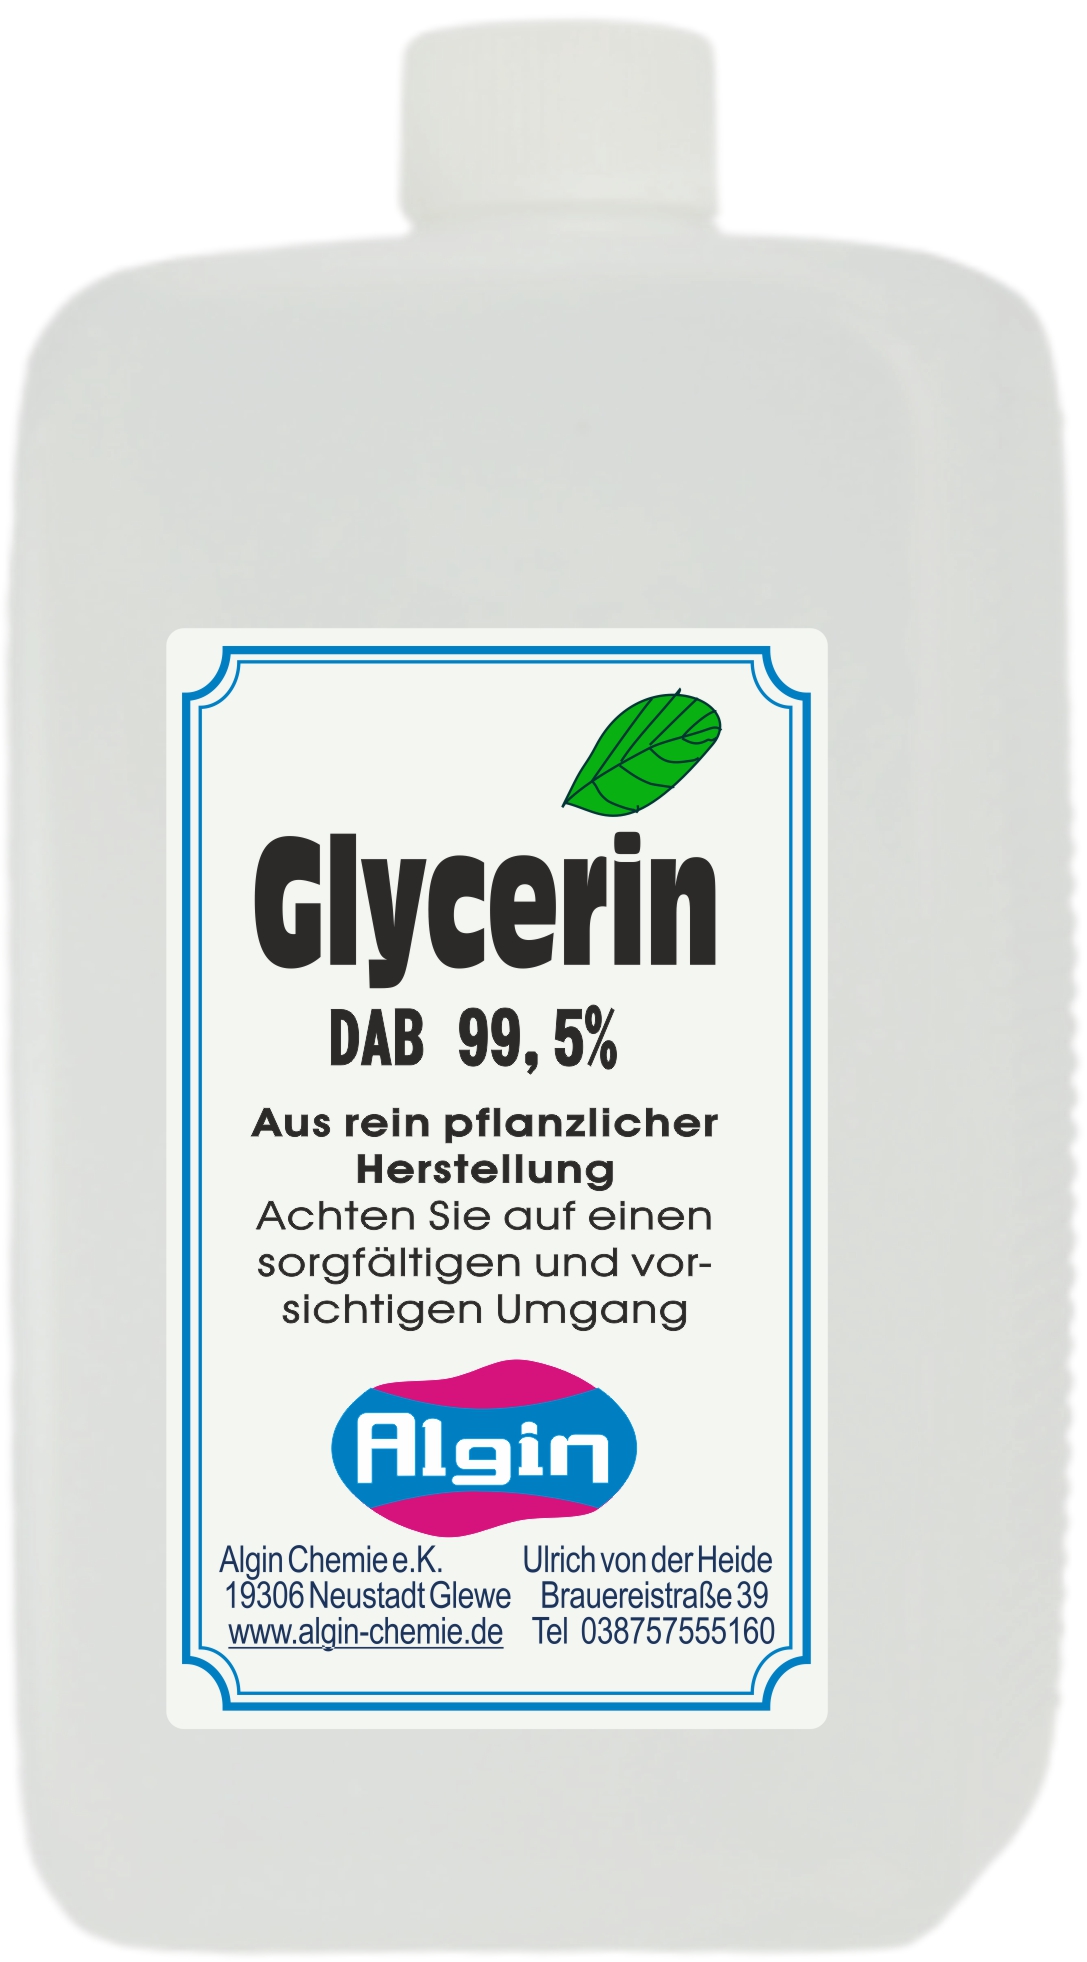 Glyzerin 1 Liter - Glycerin - Chemikalien Online bestellen